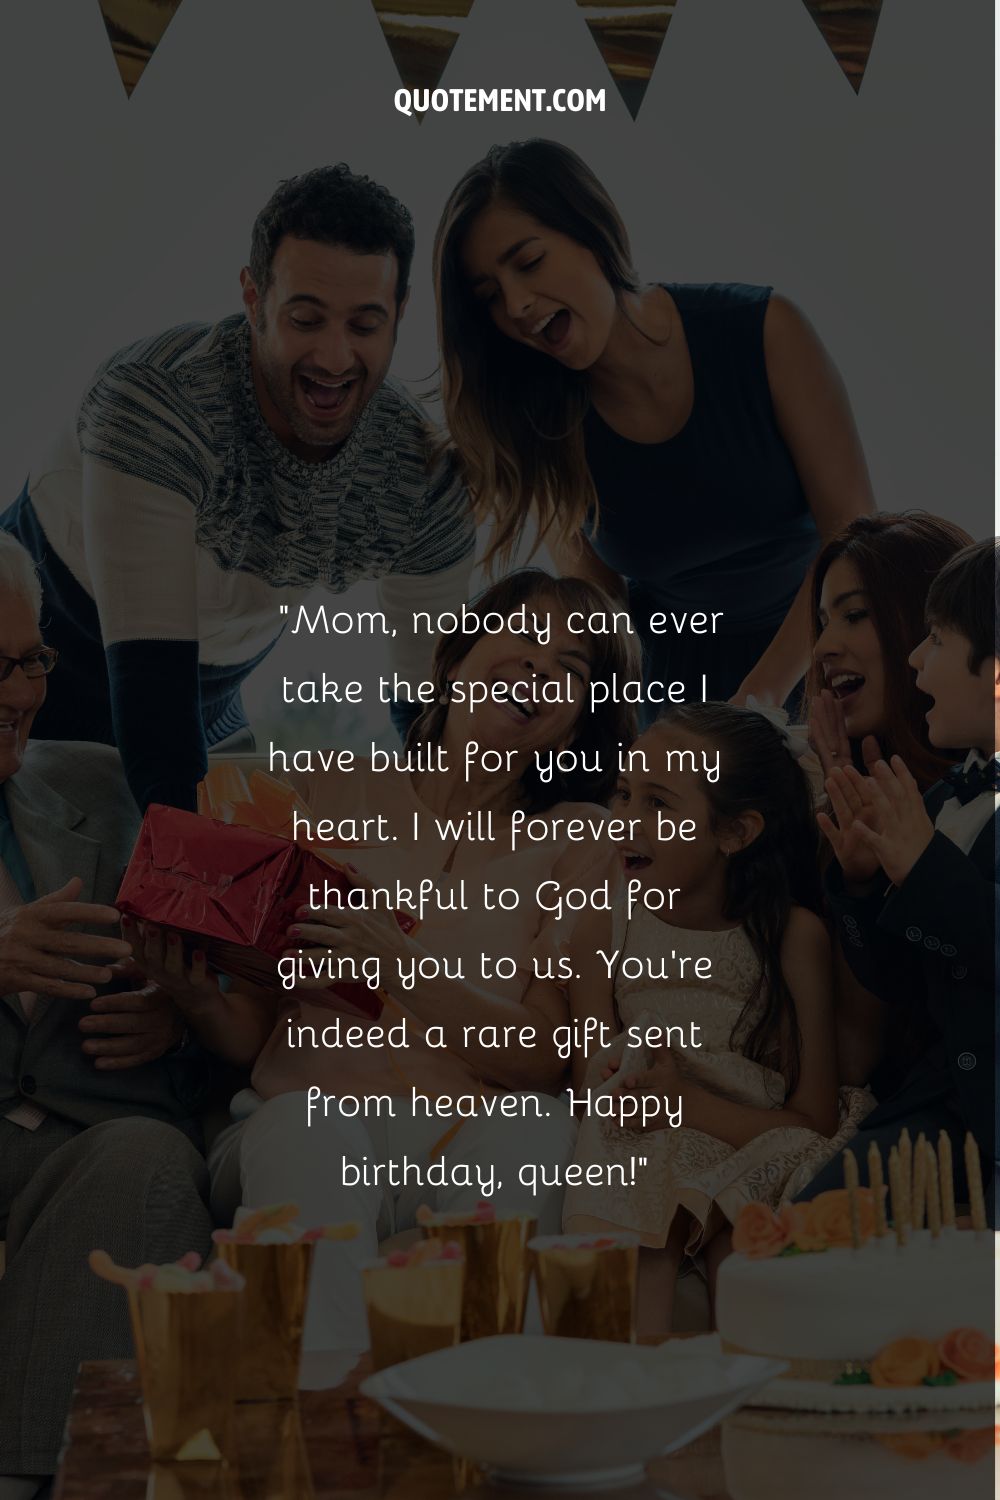 A family celebrating mom's birthday representing a happy 73rd birthday wish for mom
